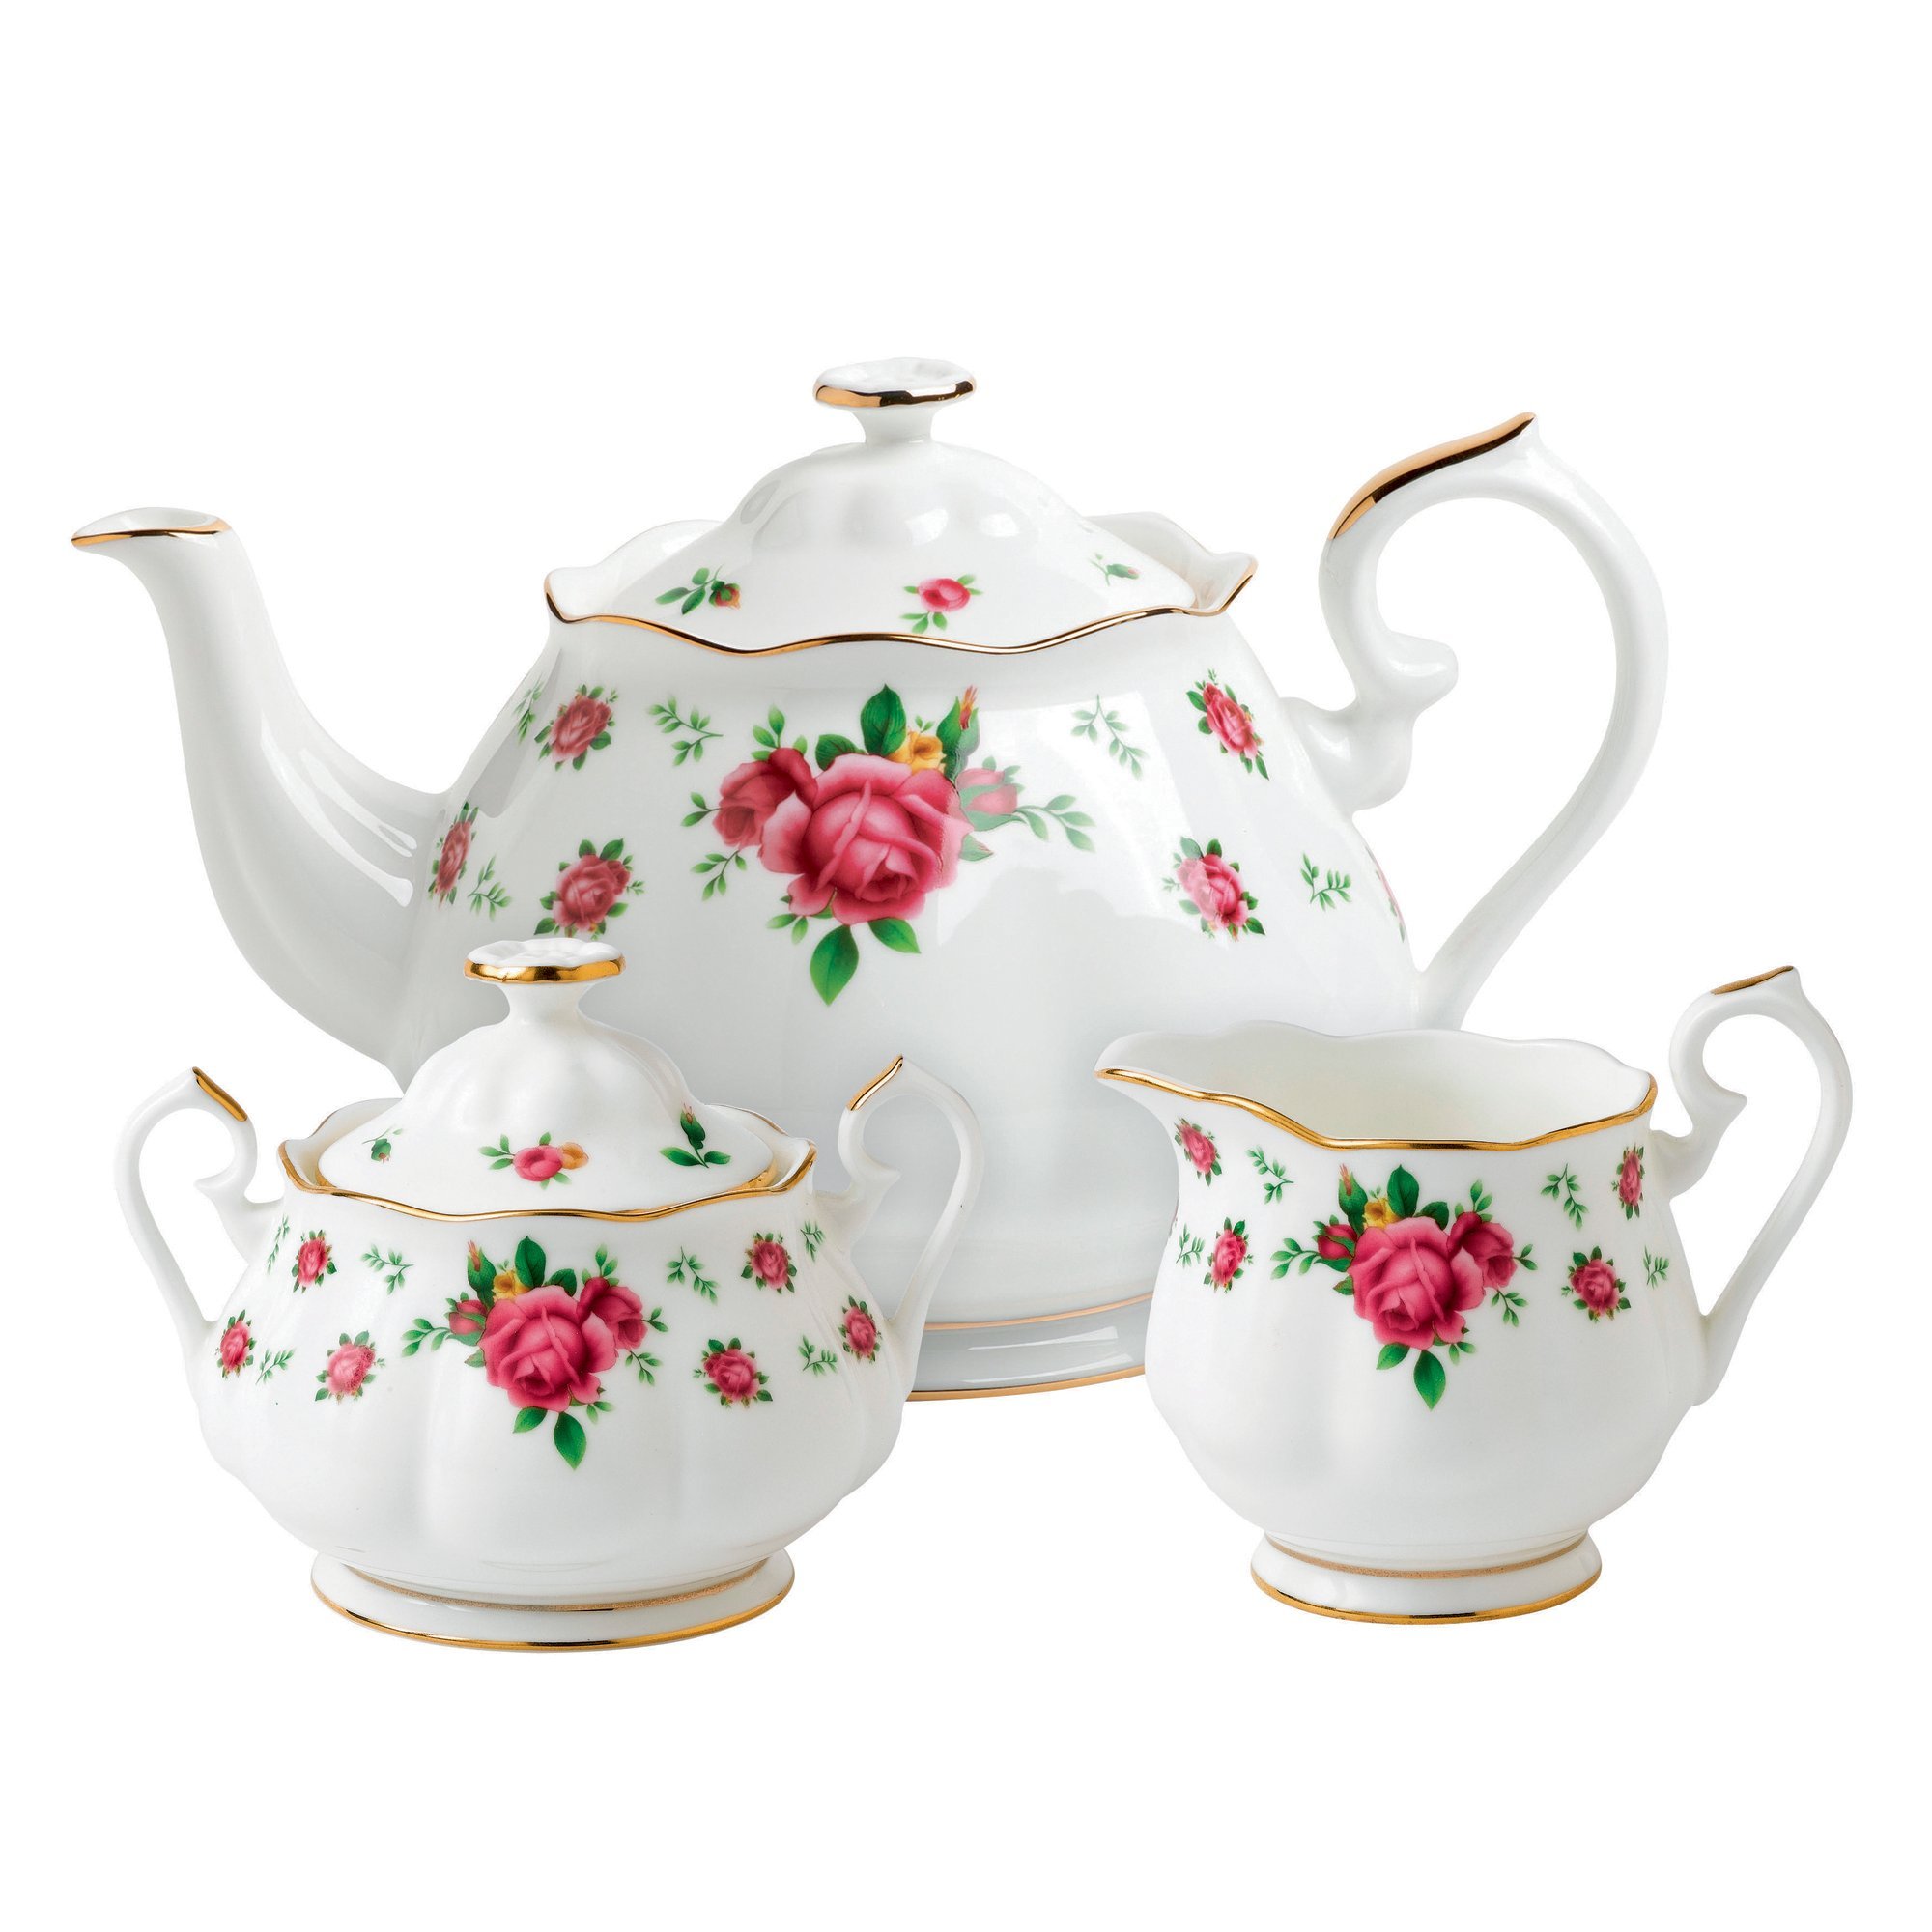 Royal Albert New Country Roses 3-Piece (Teapot, Sugar & Creamer) Tea Set, White/Pink